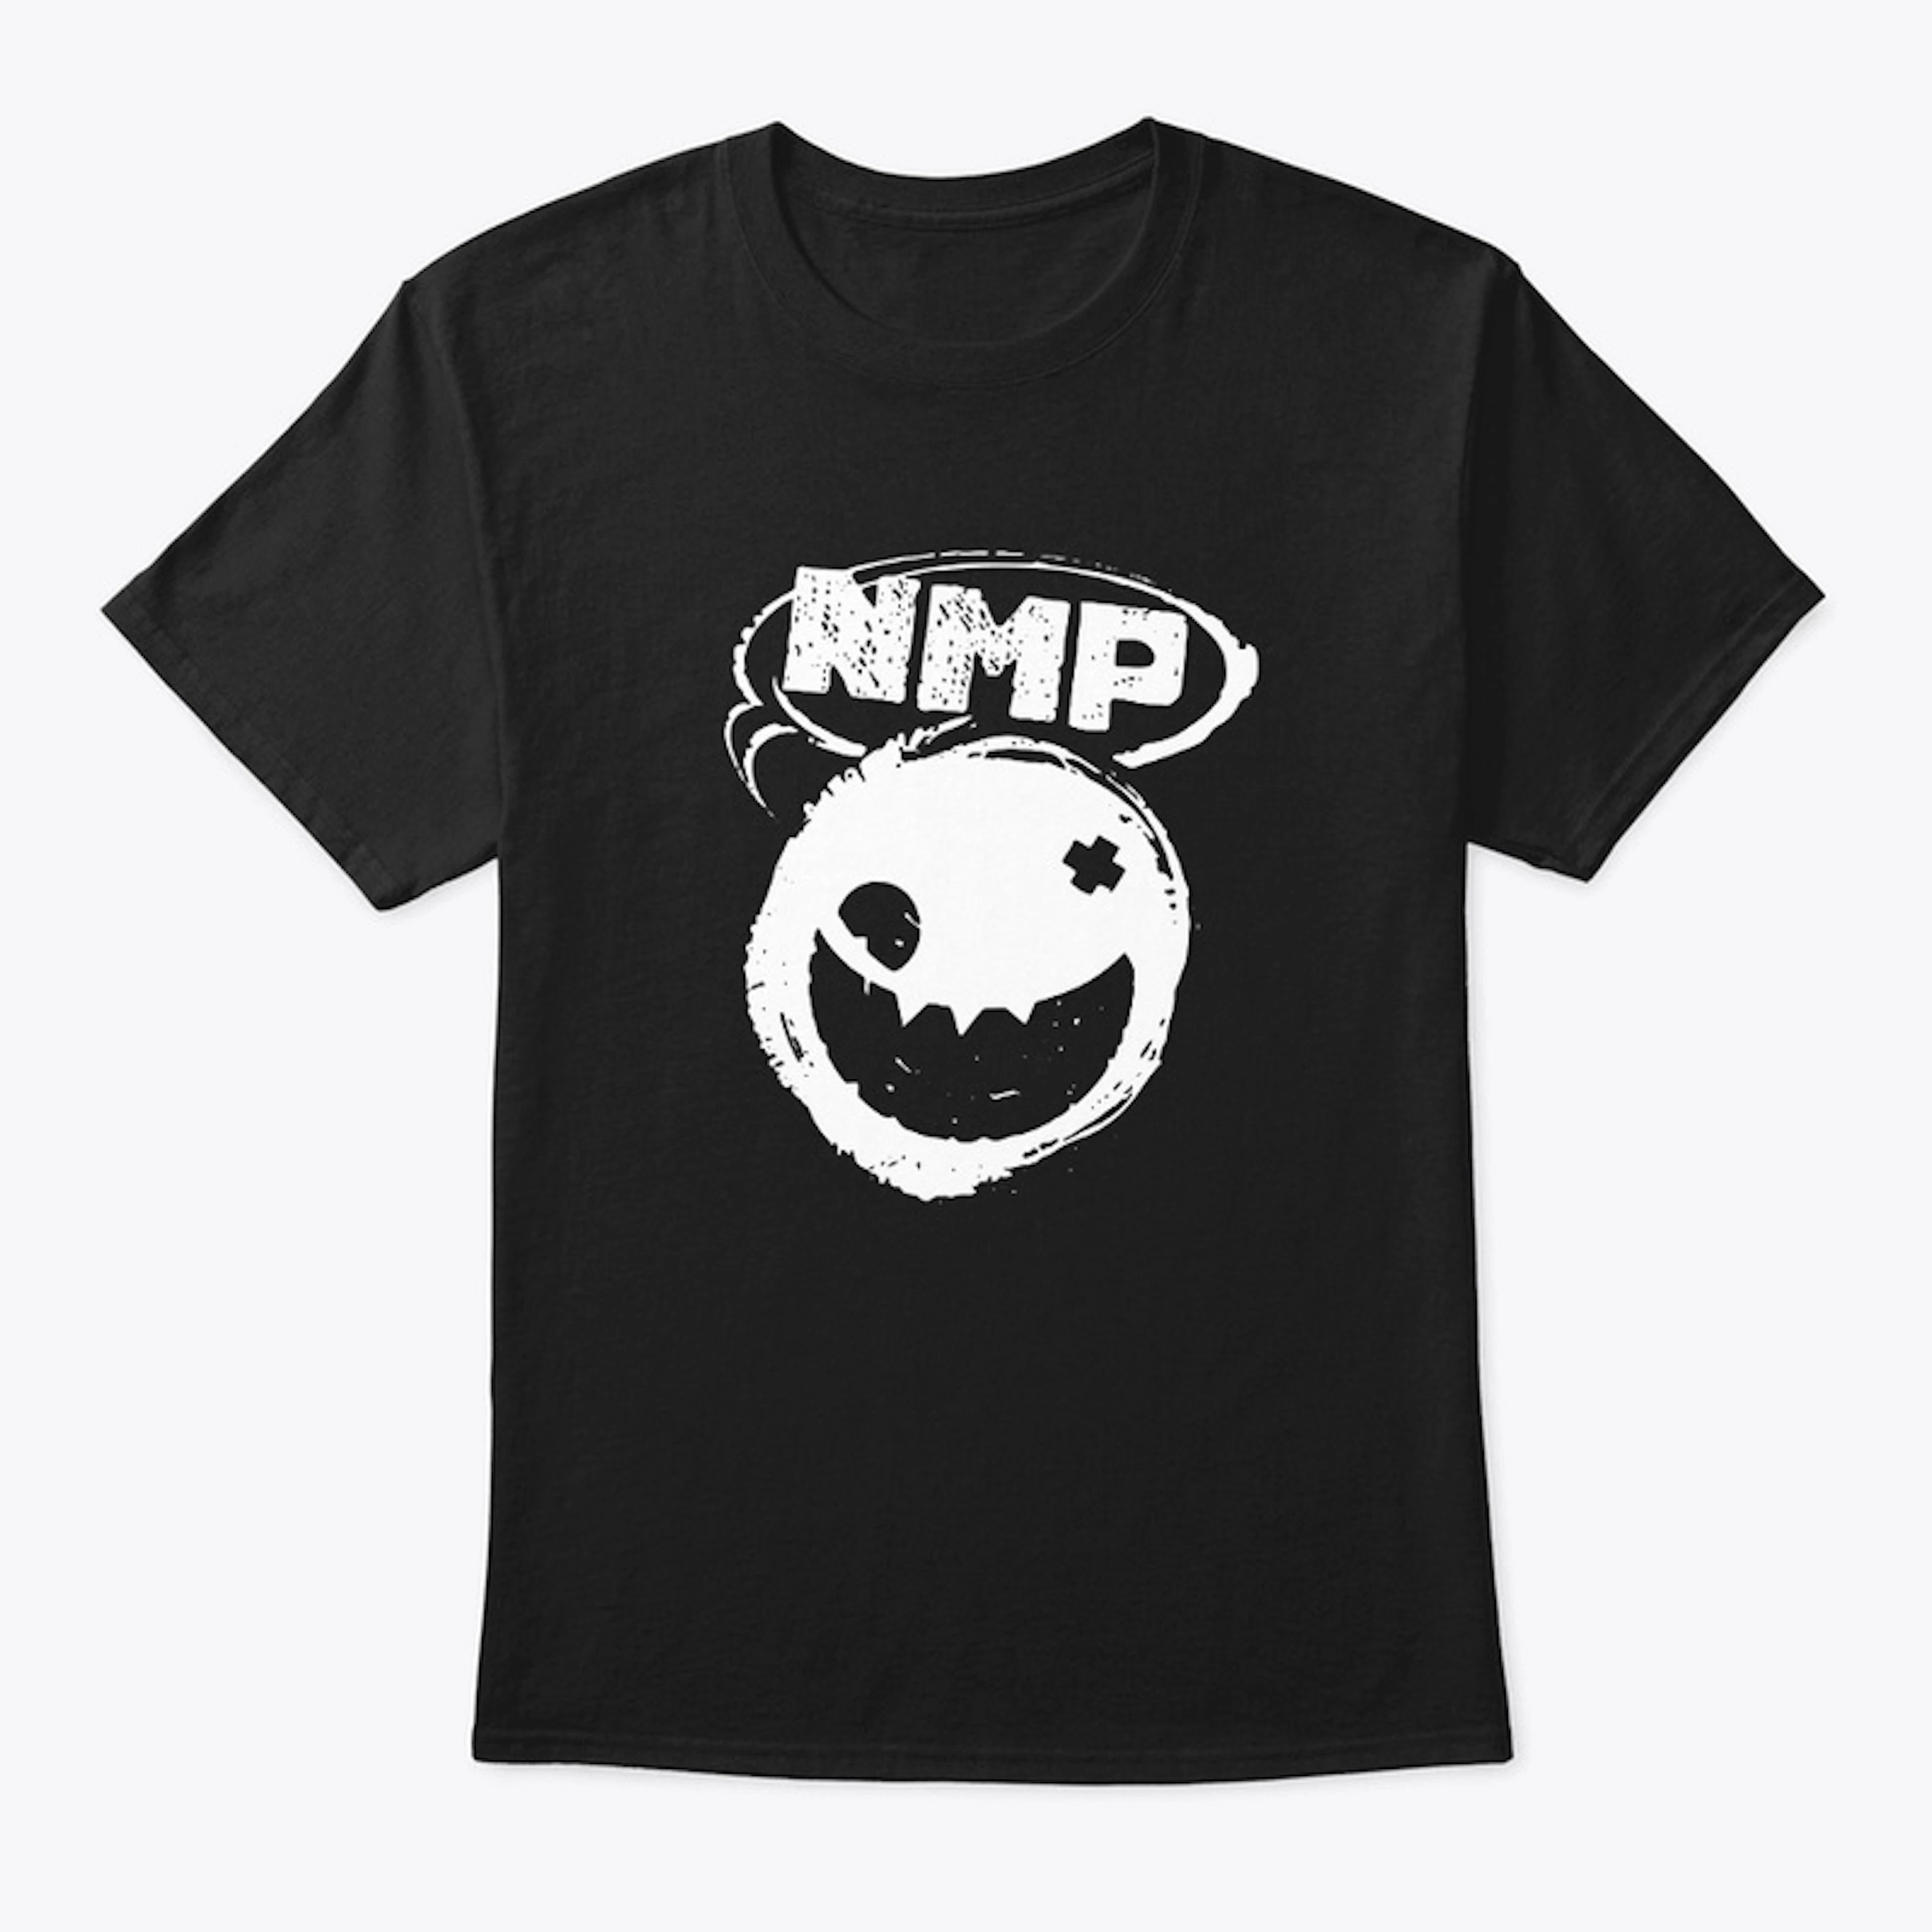 Nmplol Merchandise